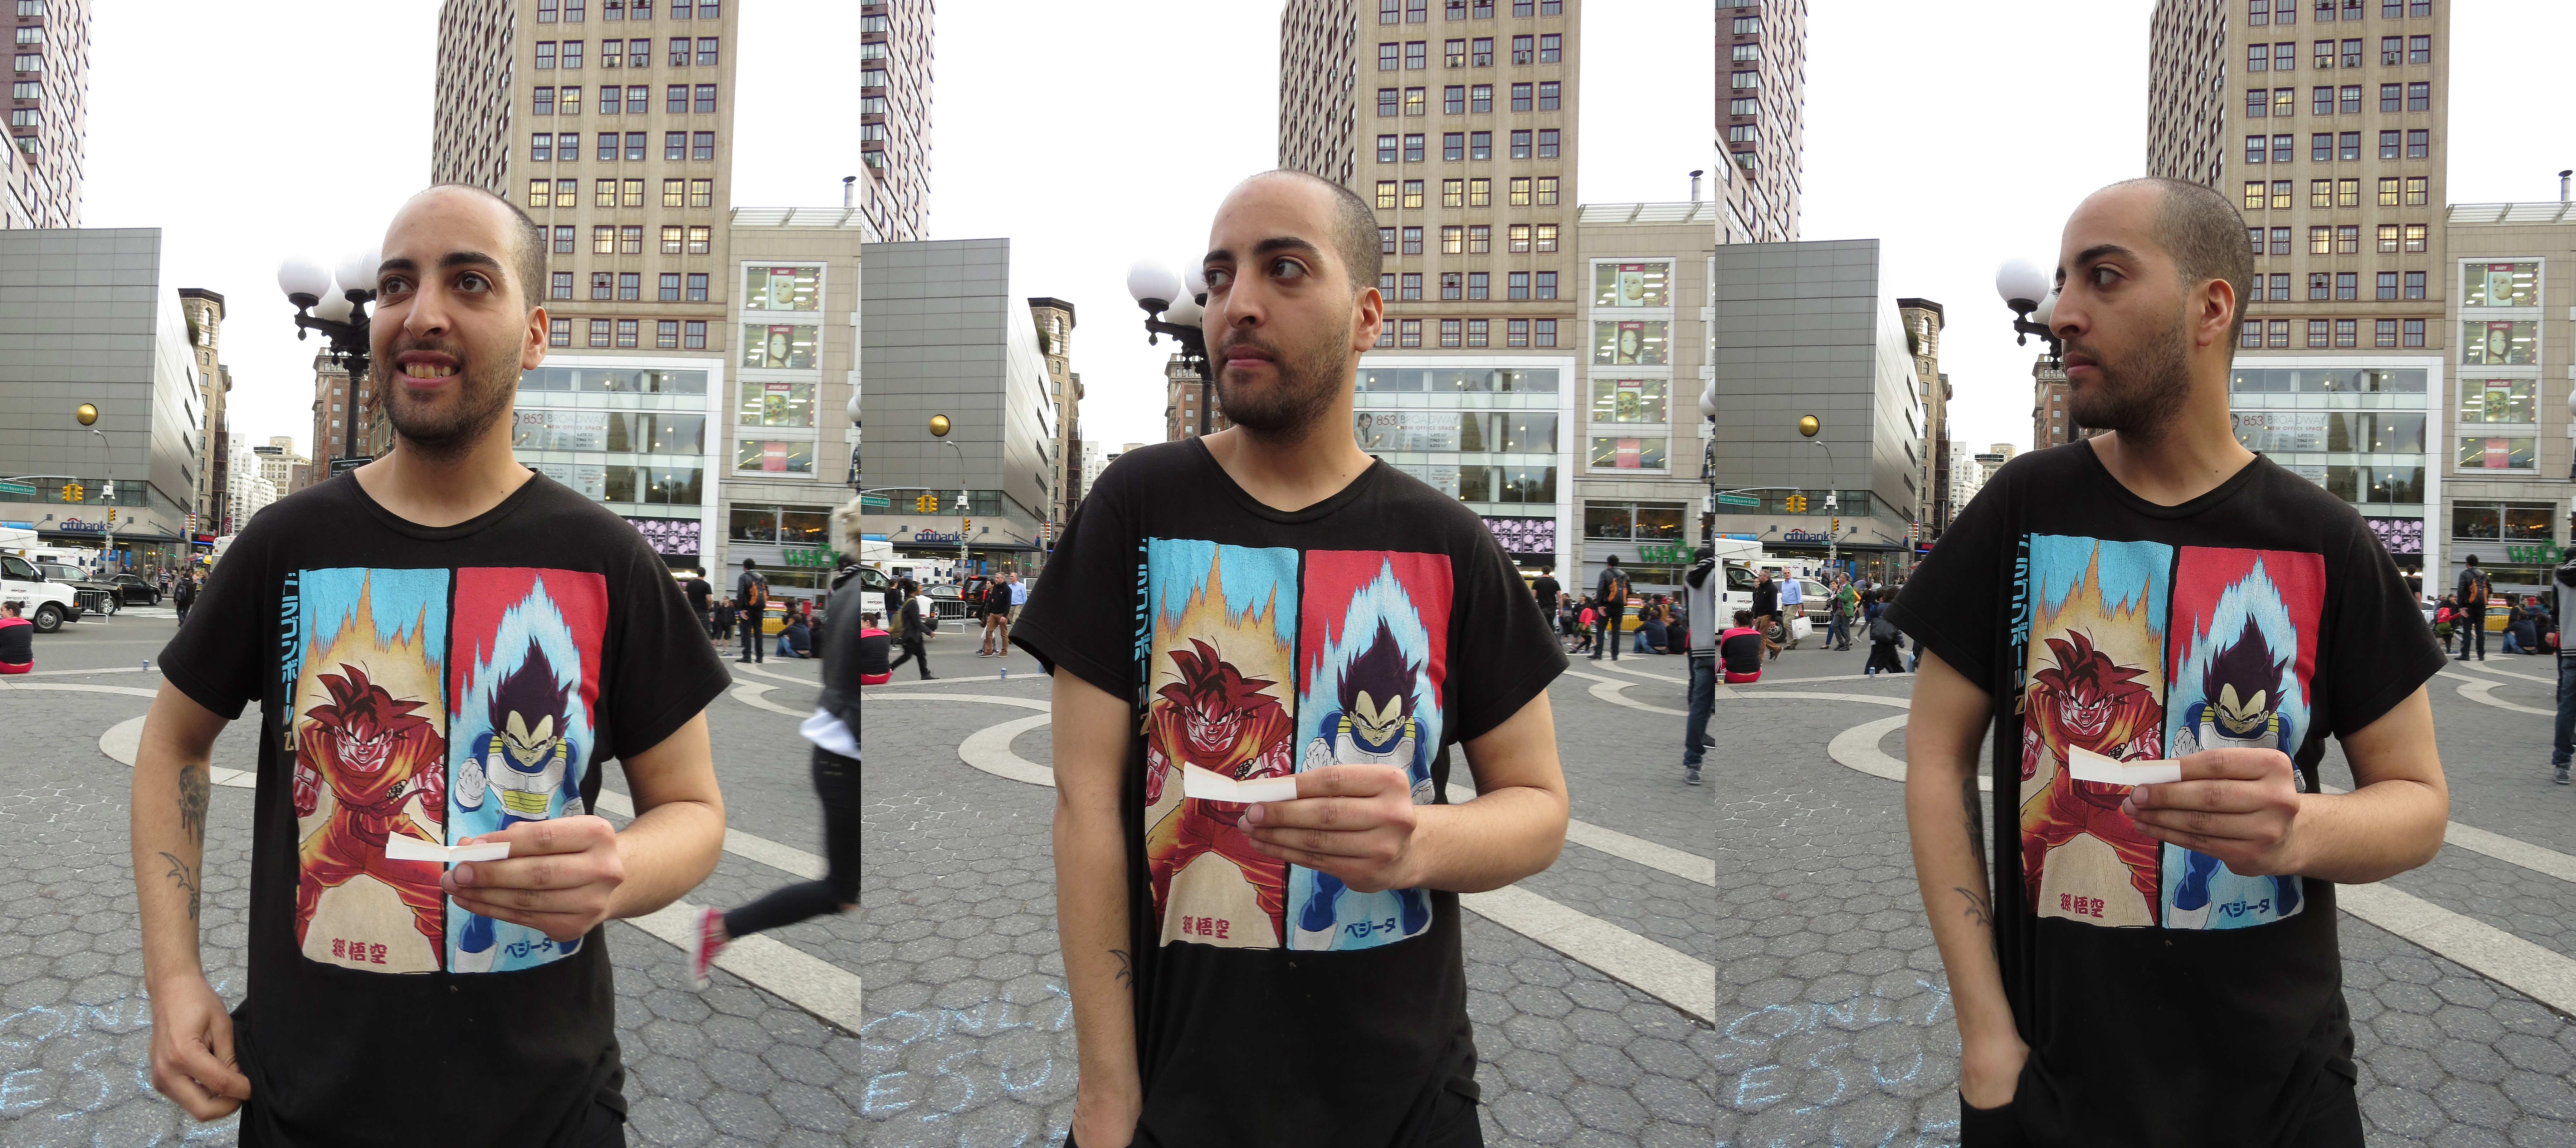 bald man in anime tee shirt